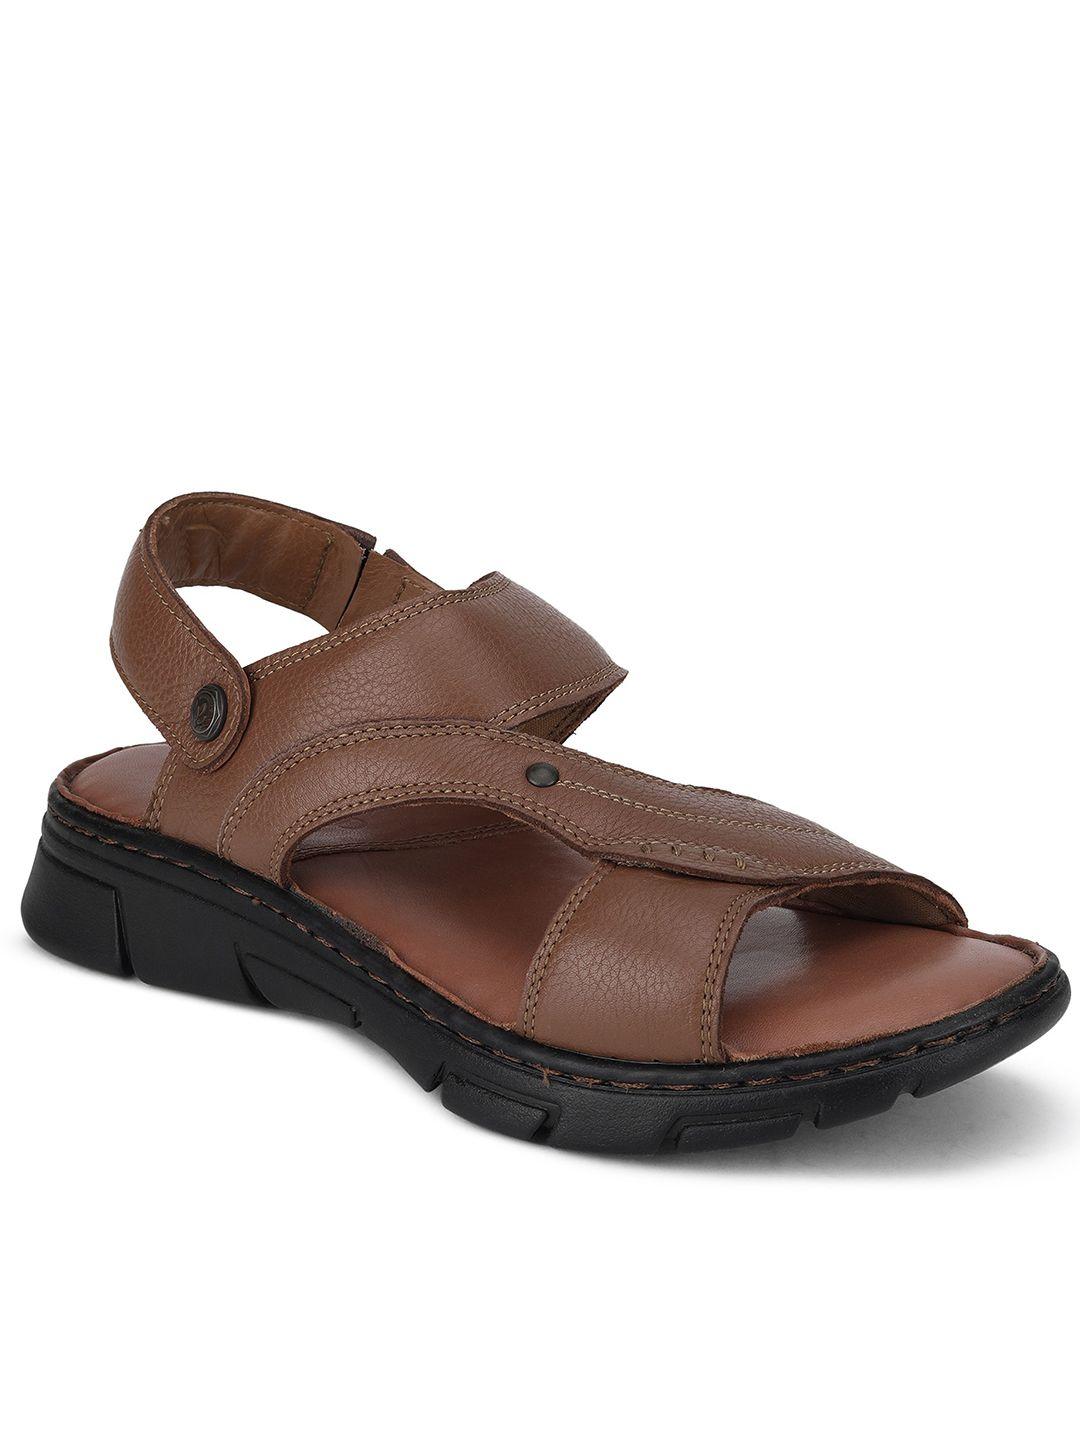 woodland-men-brown-leather-comfort-sandals